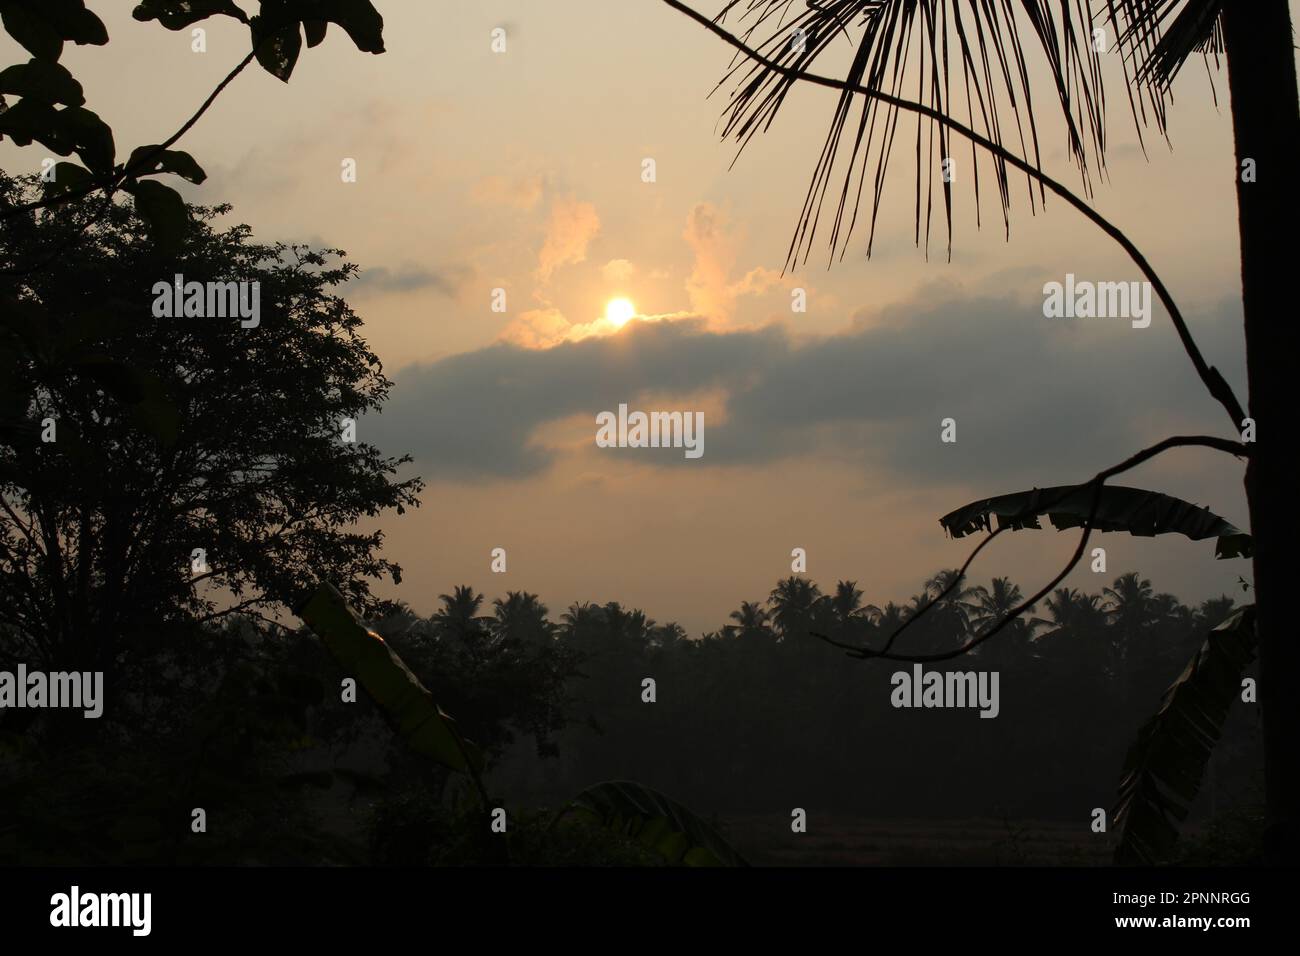 Sunrise image in a village Stock Photo